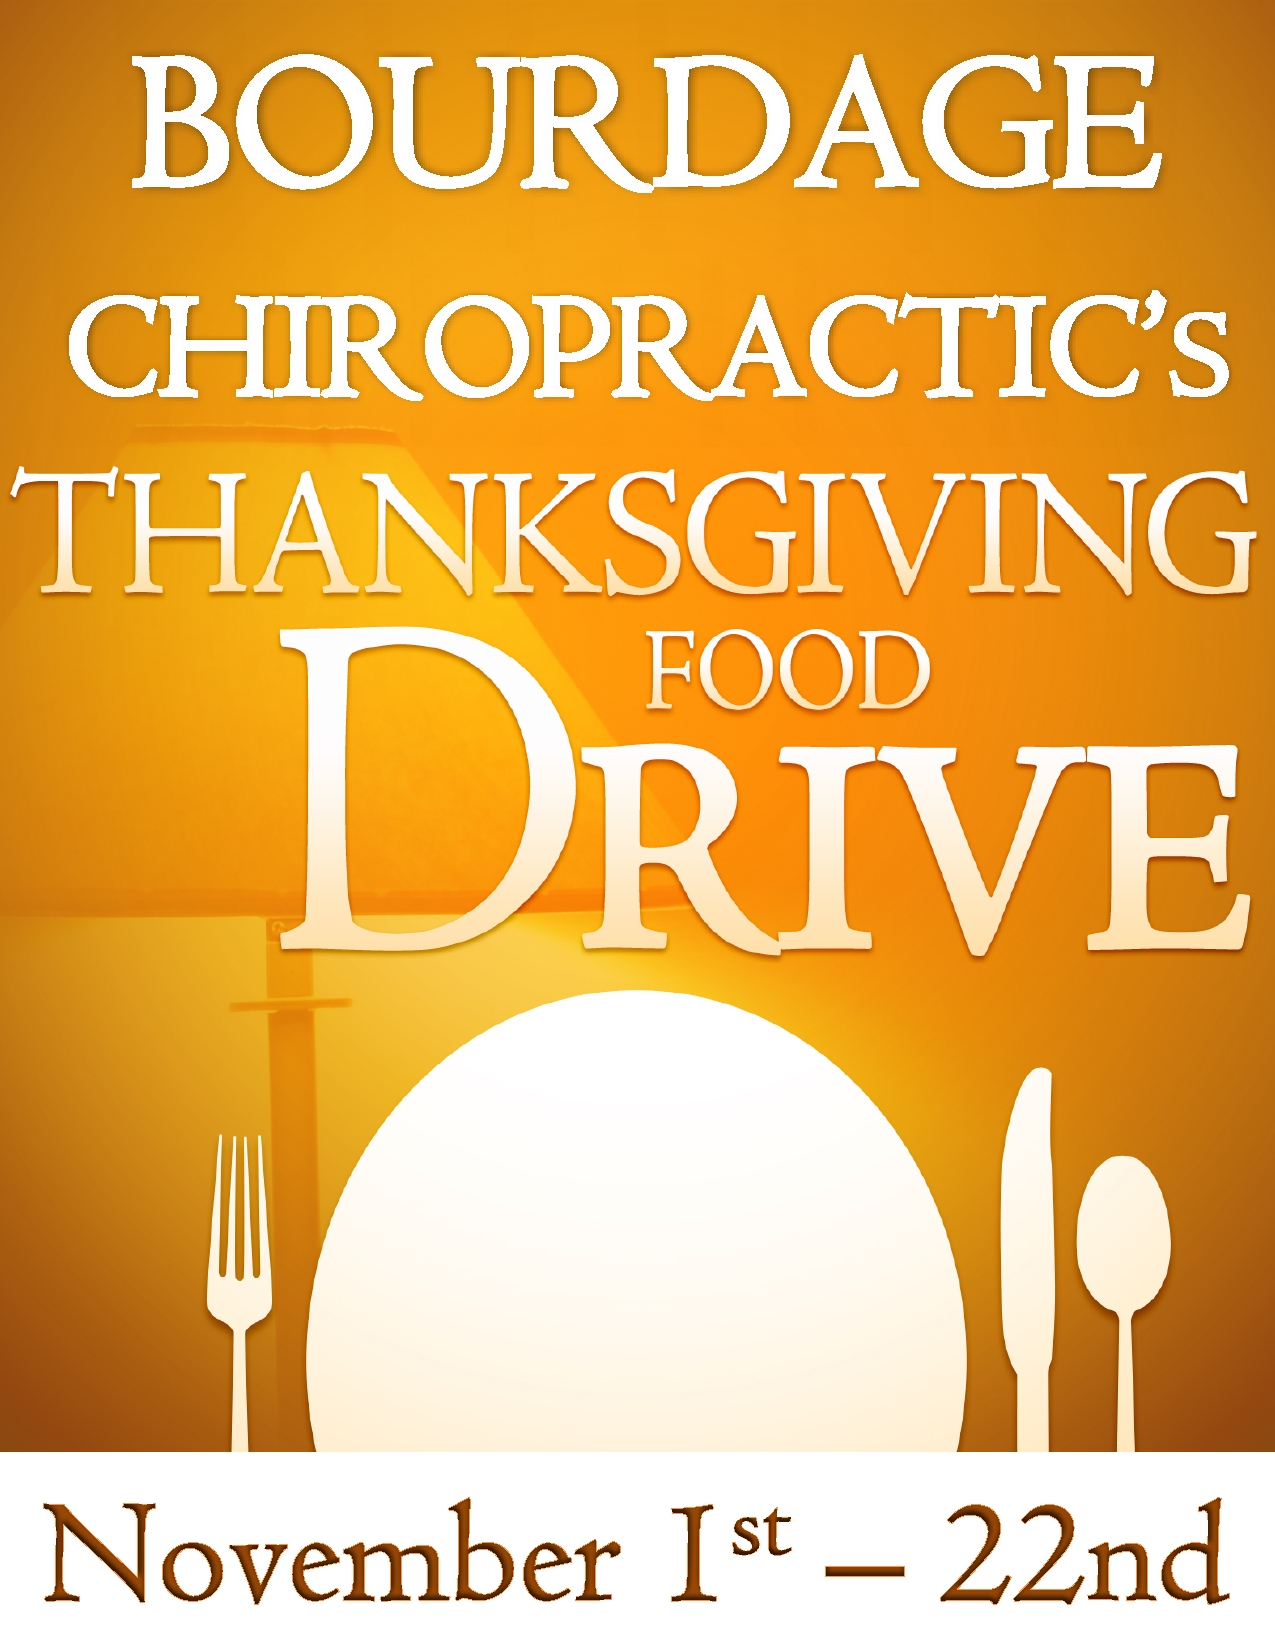 Bourdage Chiropractic Food Drive